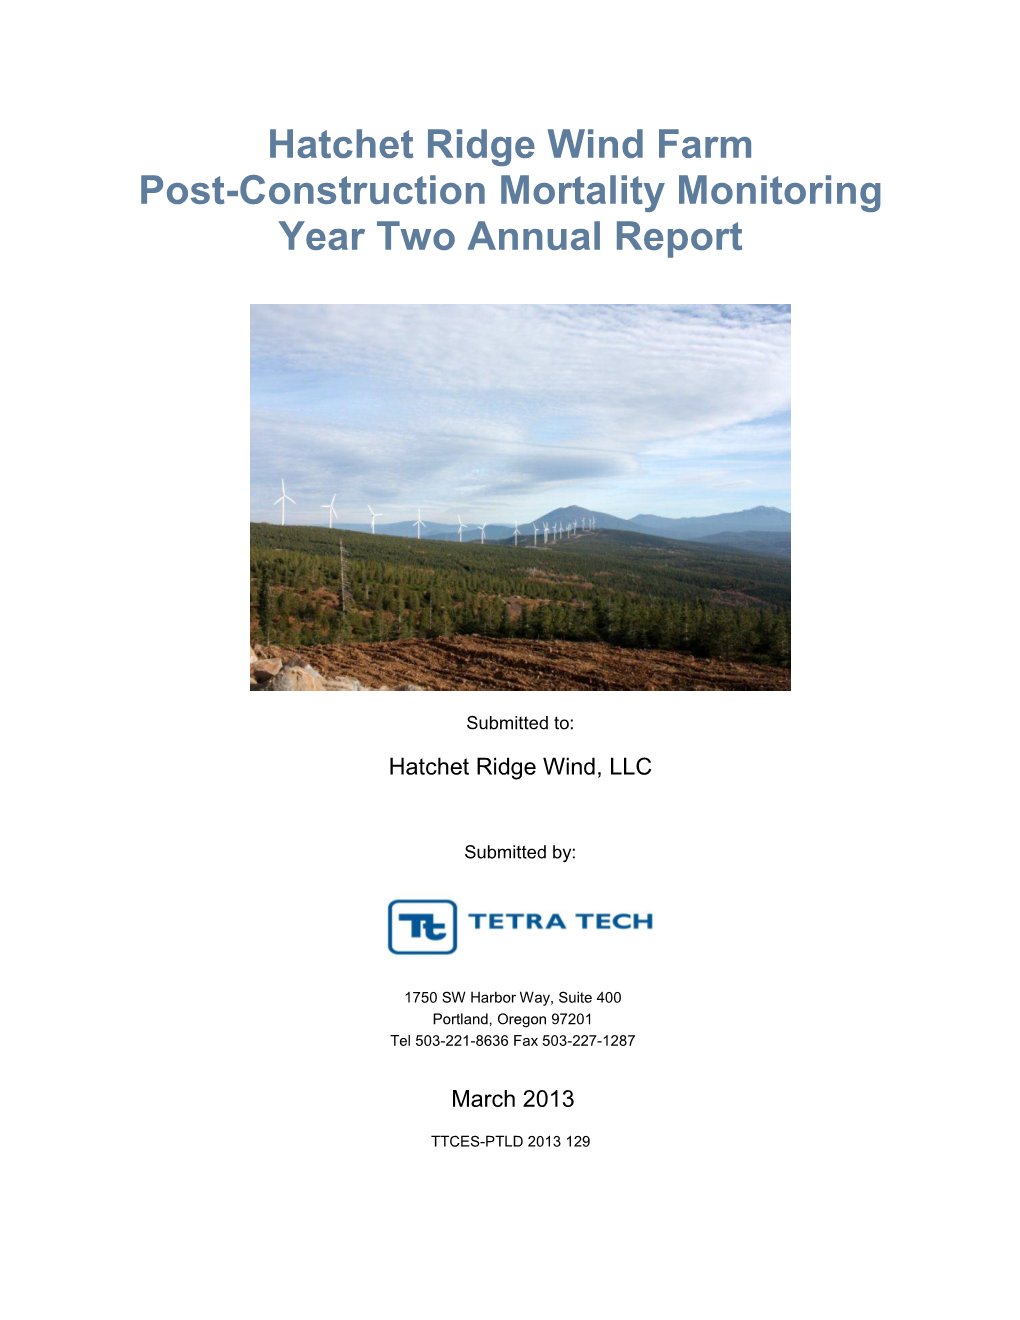 Hatchet Ridge Wind Farm Post-Construction Mortality Monitoring Year Two Annual Report